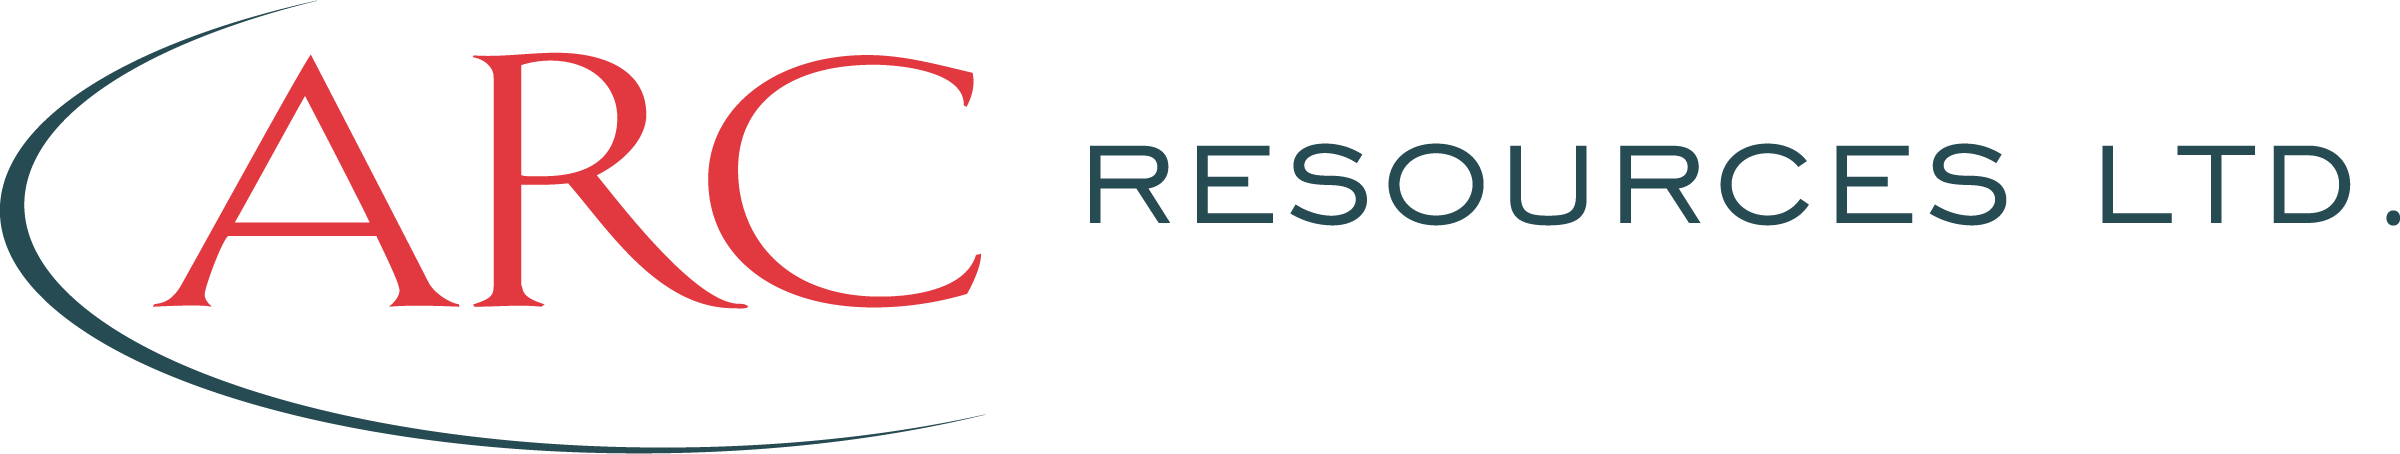 ARC resources ltd logo